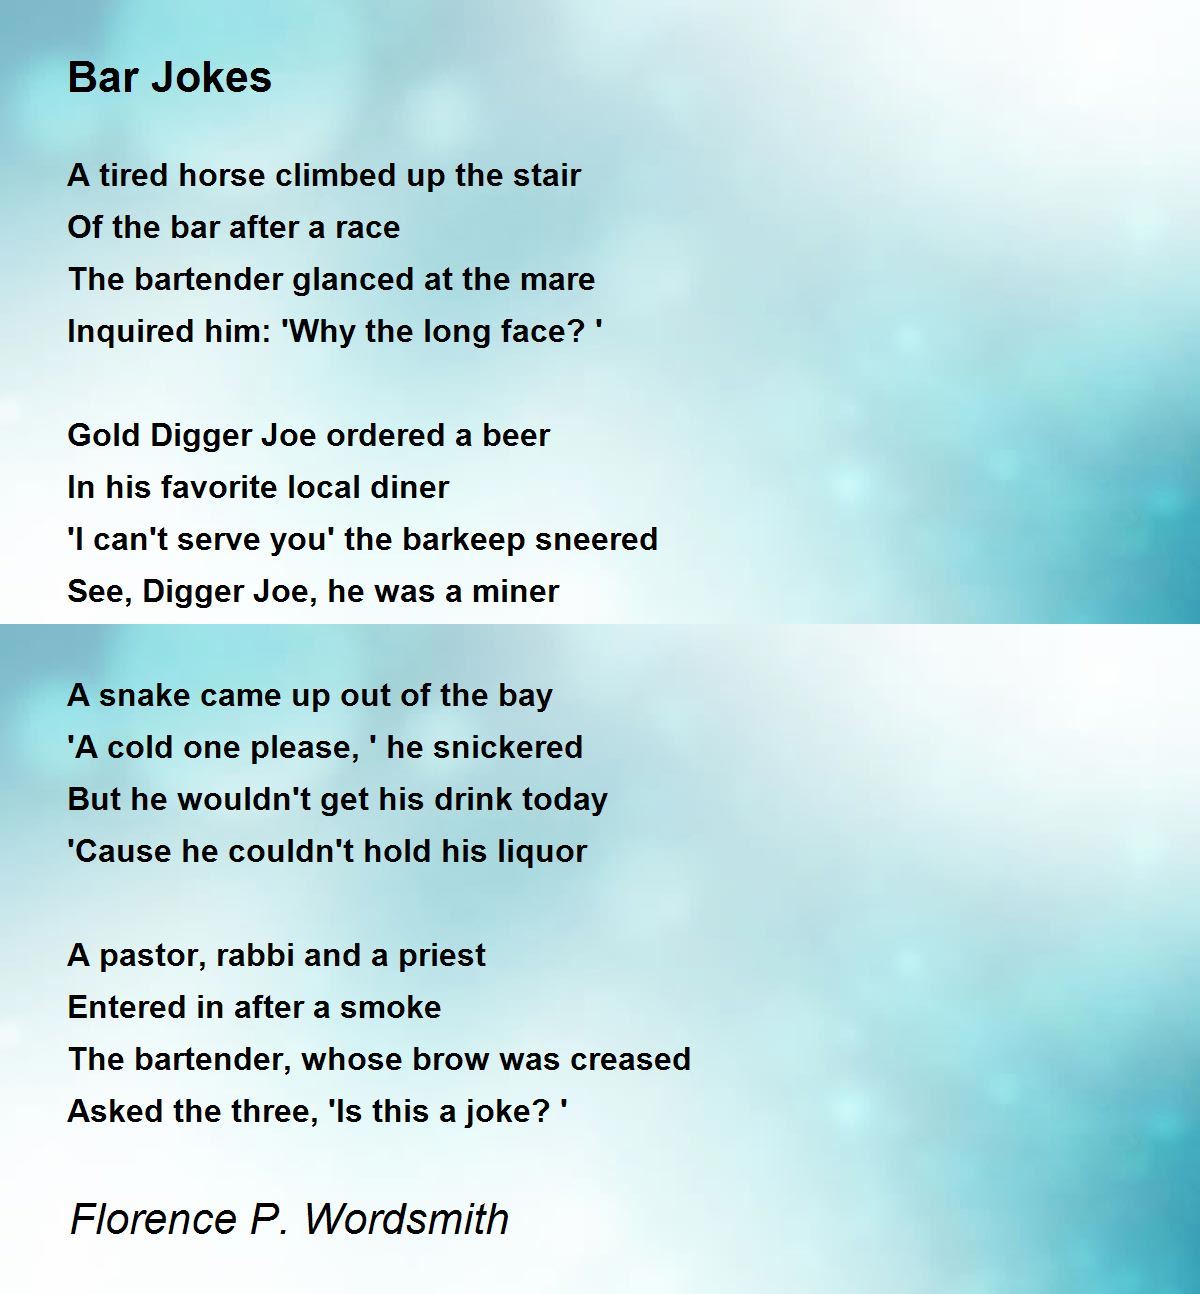 Bar Jokes - Bar Jokes Poem by Florence P. Wordsmith